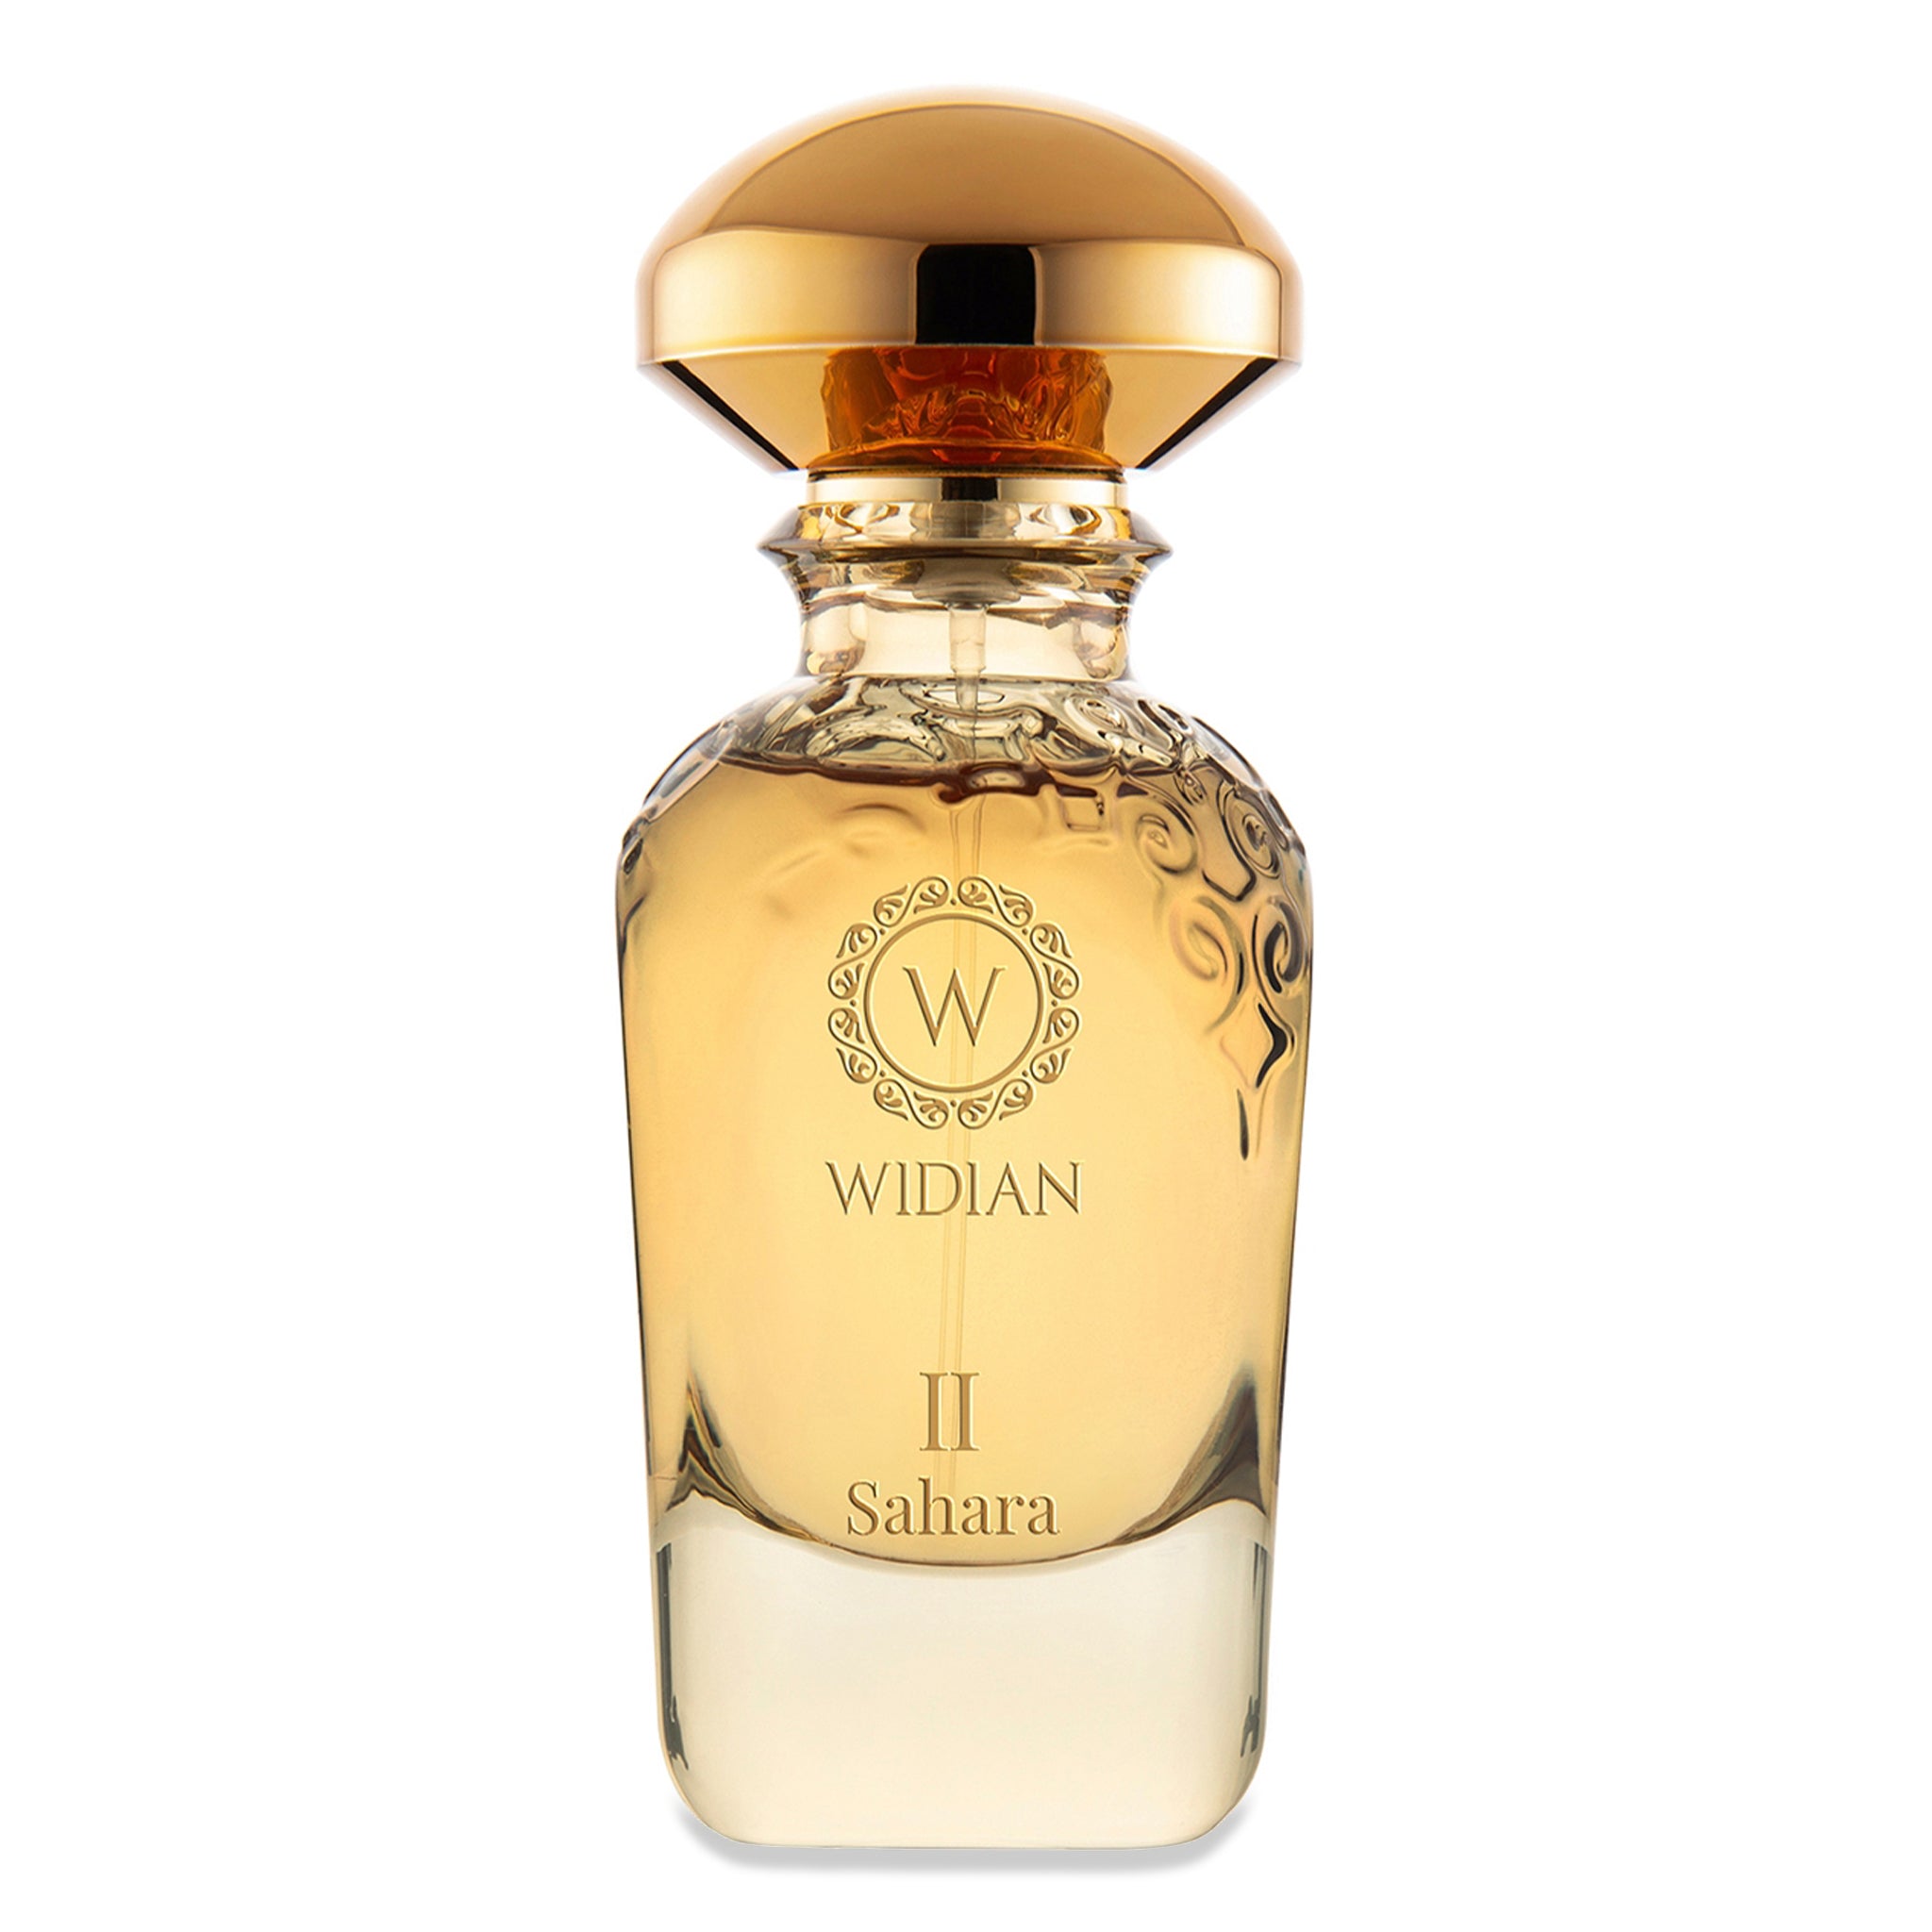 Image of Widian Gold II Sahara Eau De Parfum 50ml